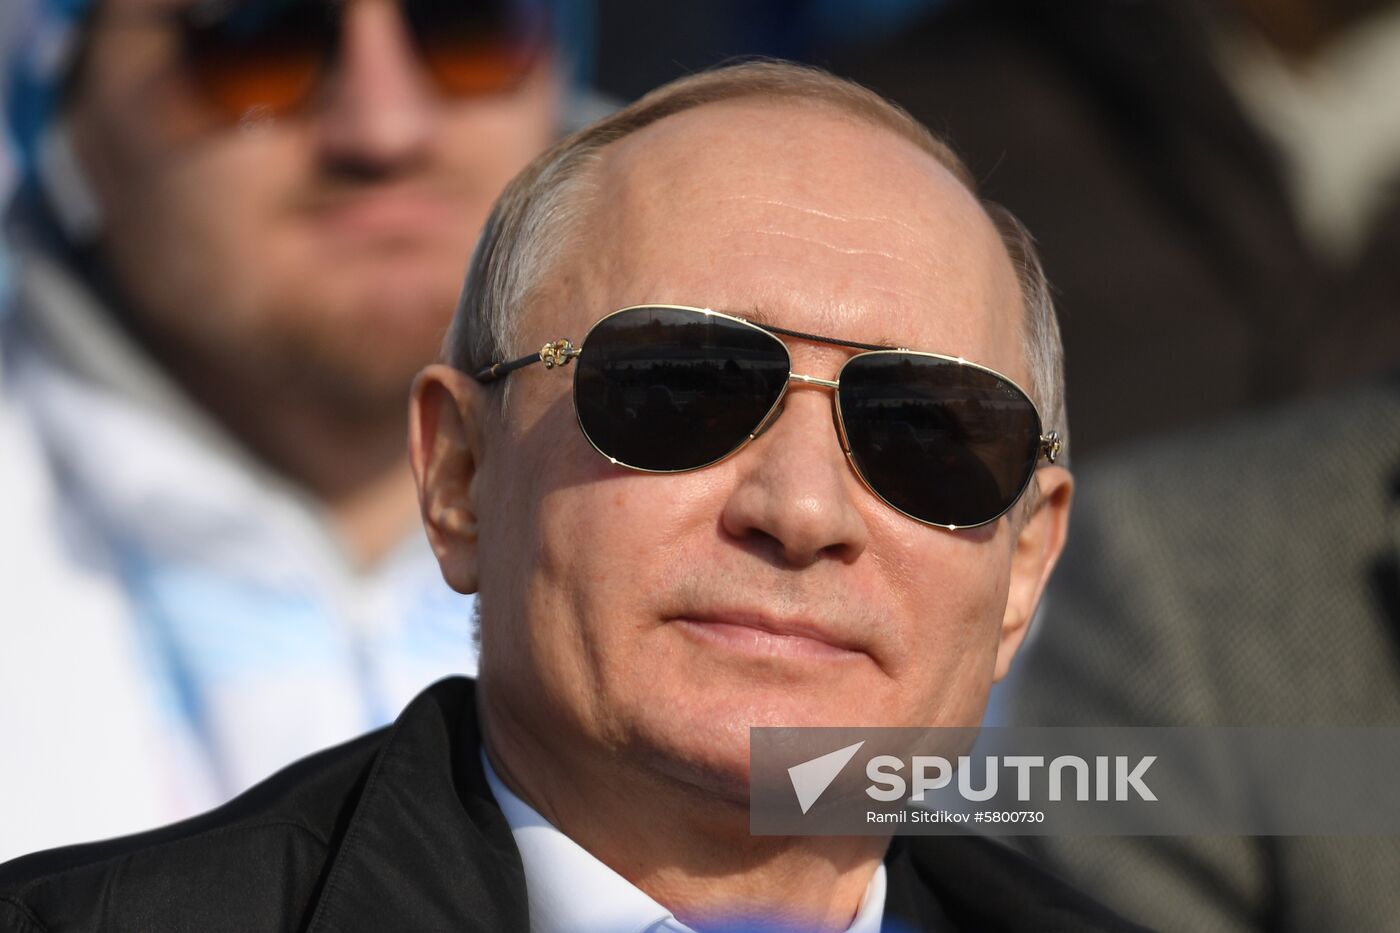 Russia Universiade Putin